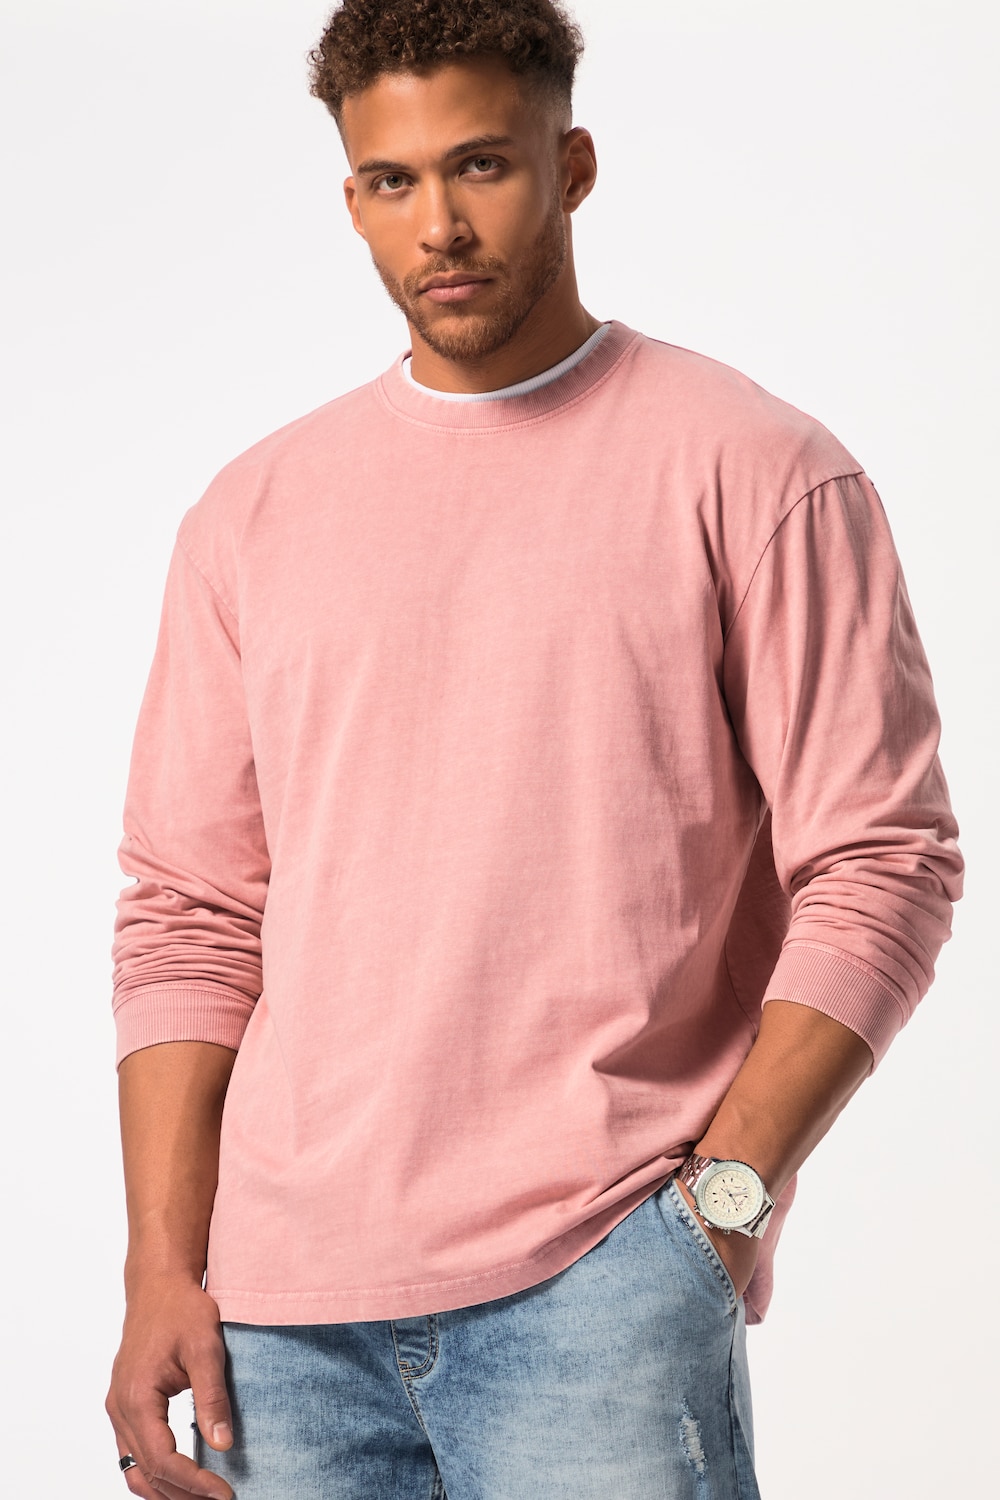 Grote Maten STHUGE shirt met lange mouwenmale, roze, Maat: L, Katoen, STHUGE